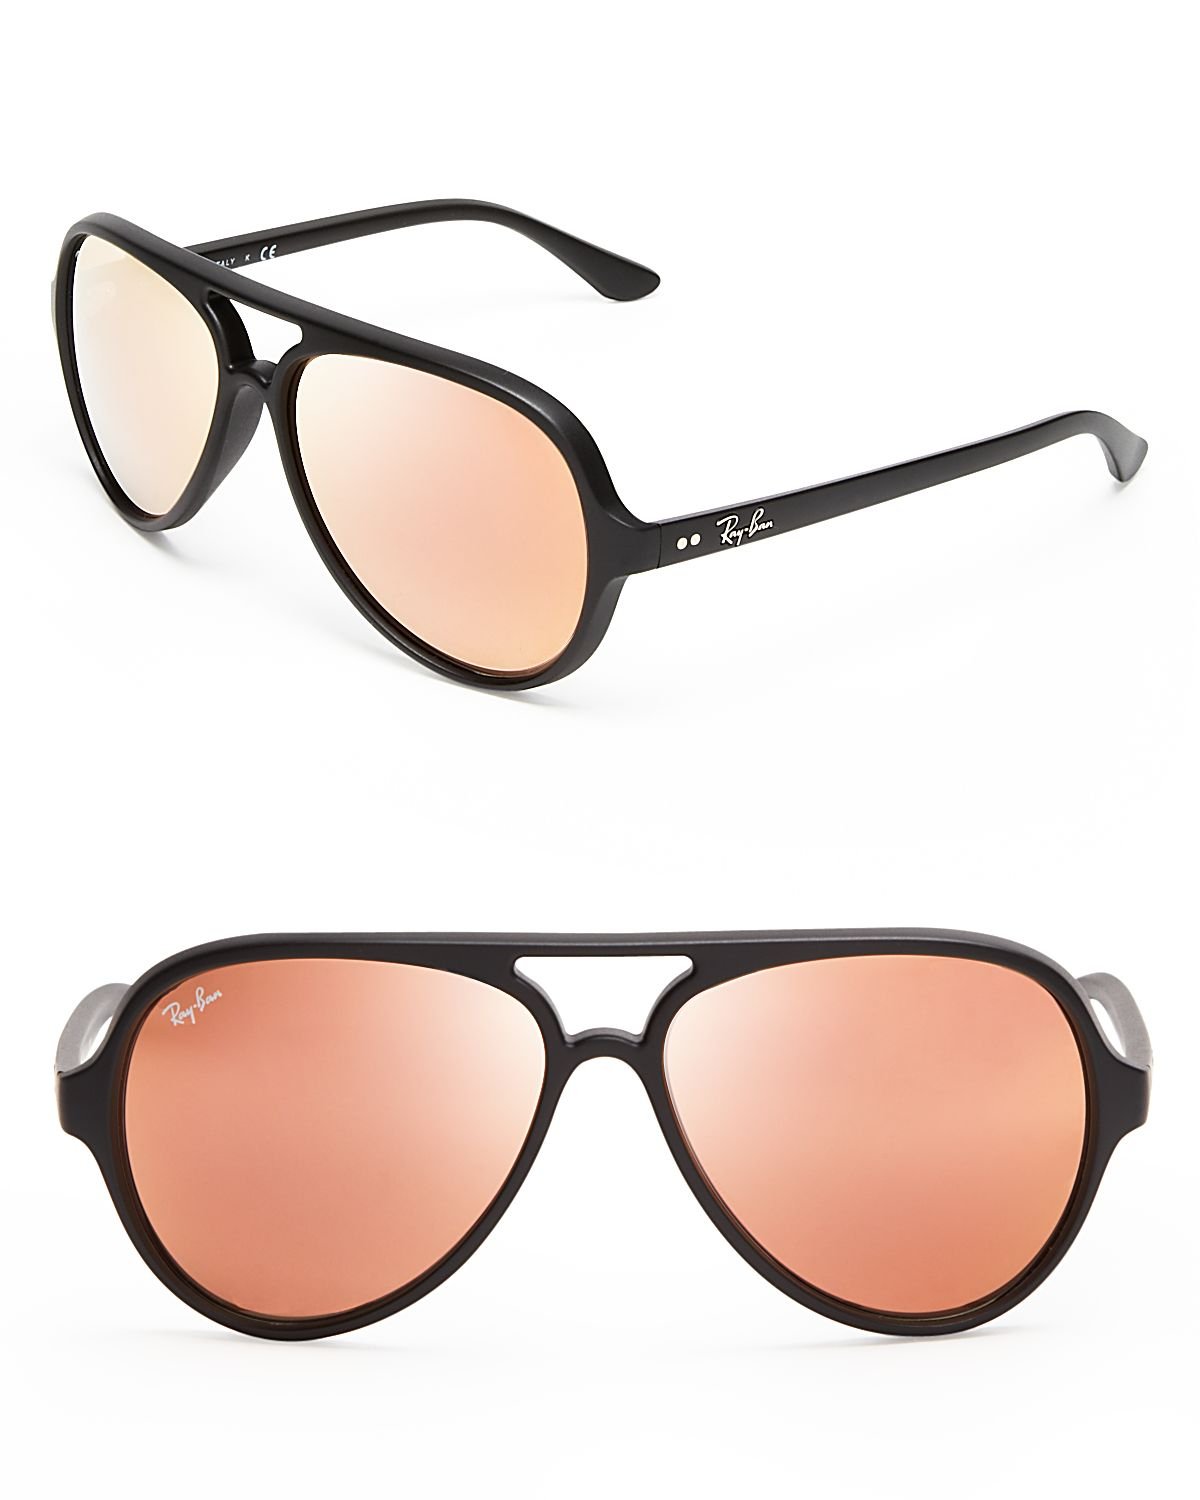 ray-ban-black-matte-mirrored-aviator-sunglasses-product-1-16195281-0-065805035-normal.jpeg